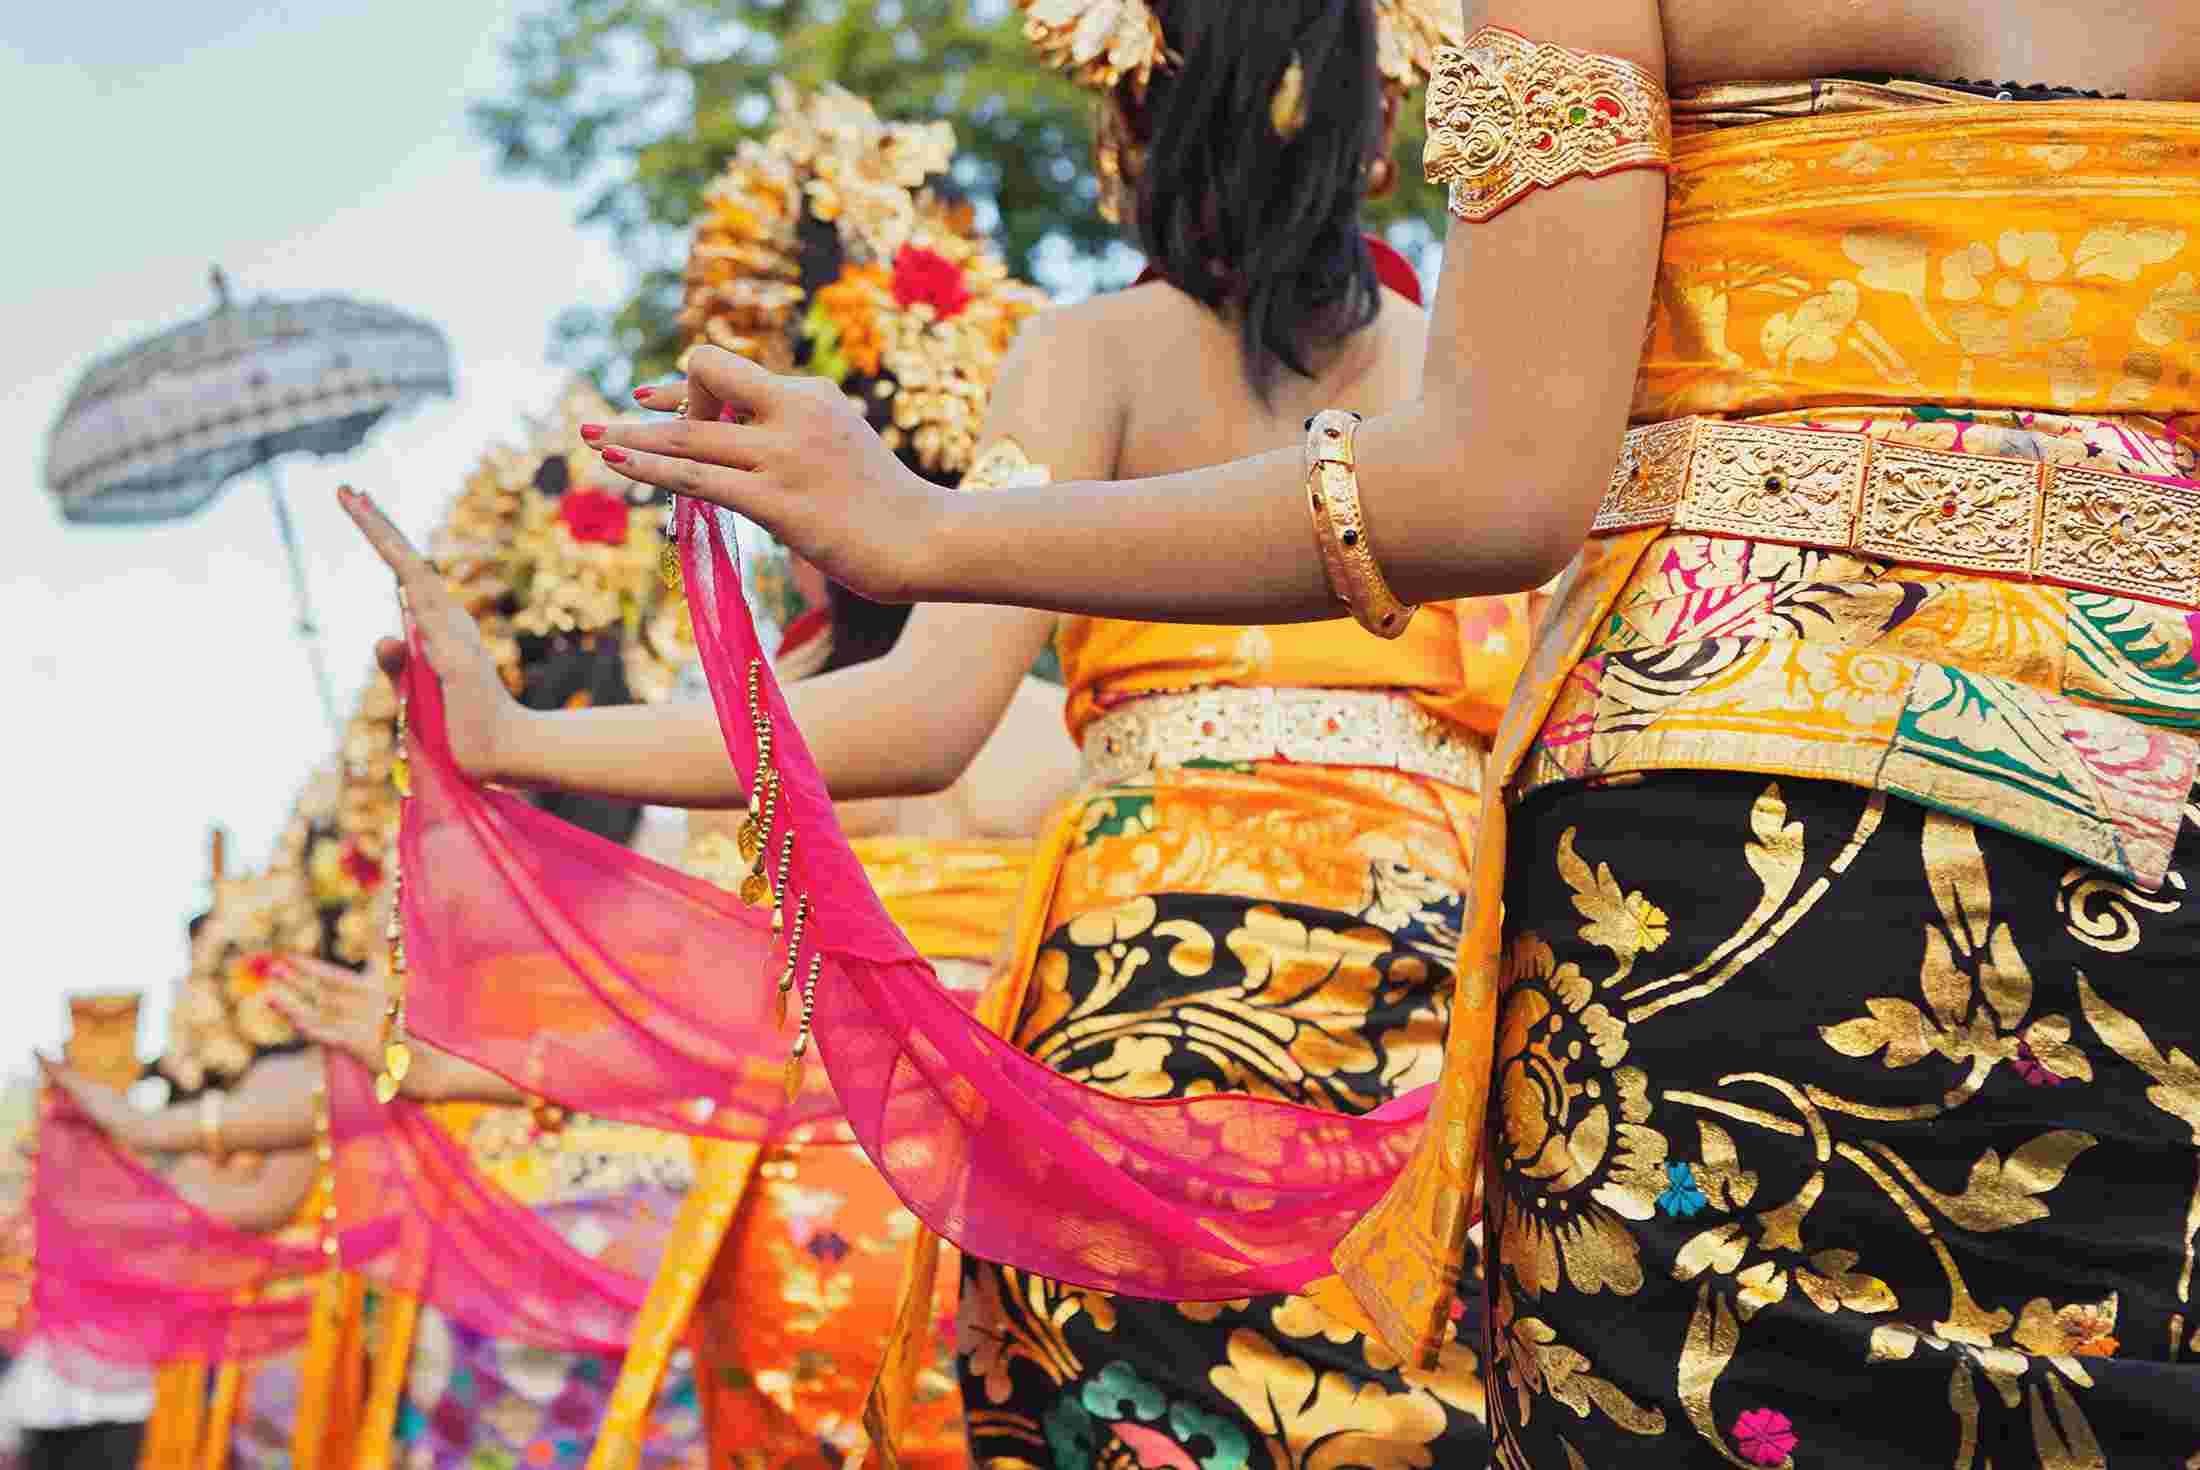 Balinese women in traditional dress